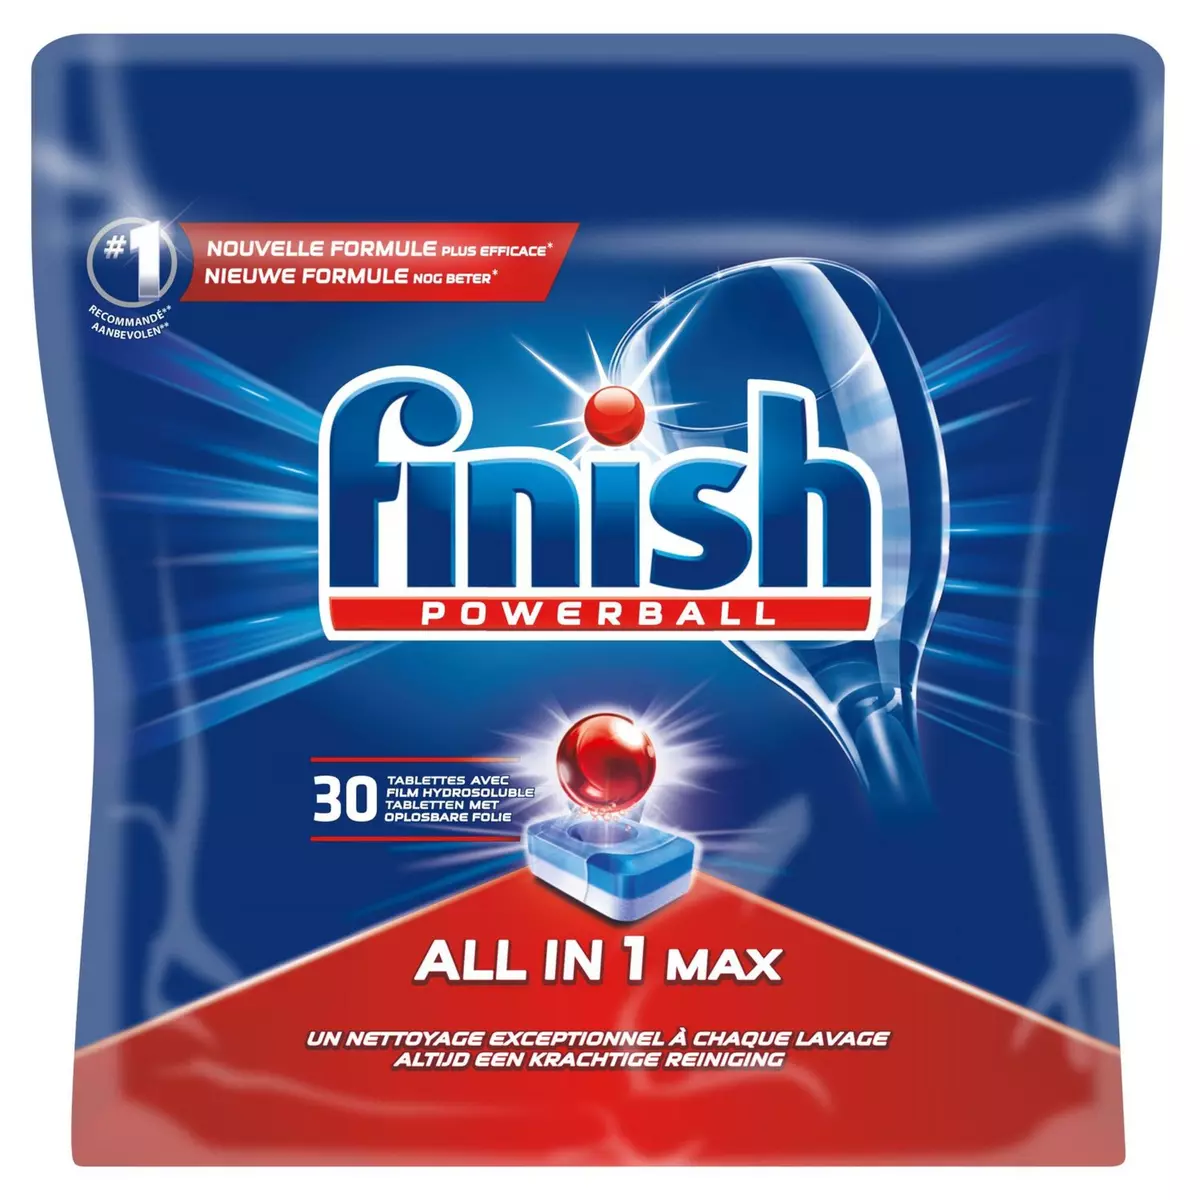 FINISH Powerball tablettes lave-vaisselle tout-en-1 max 30 tablettes